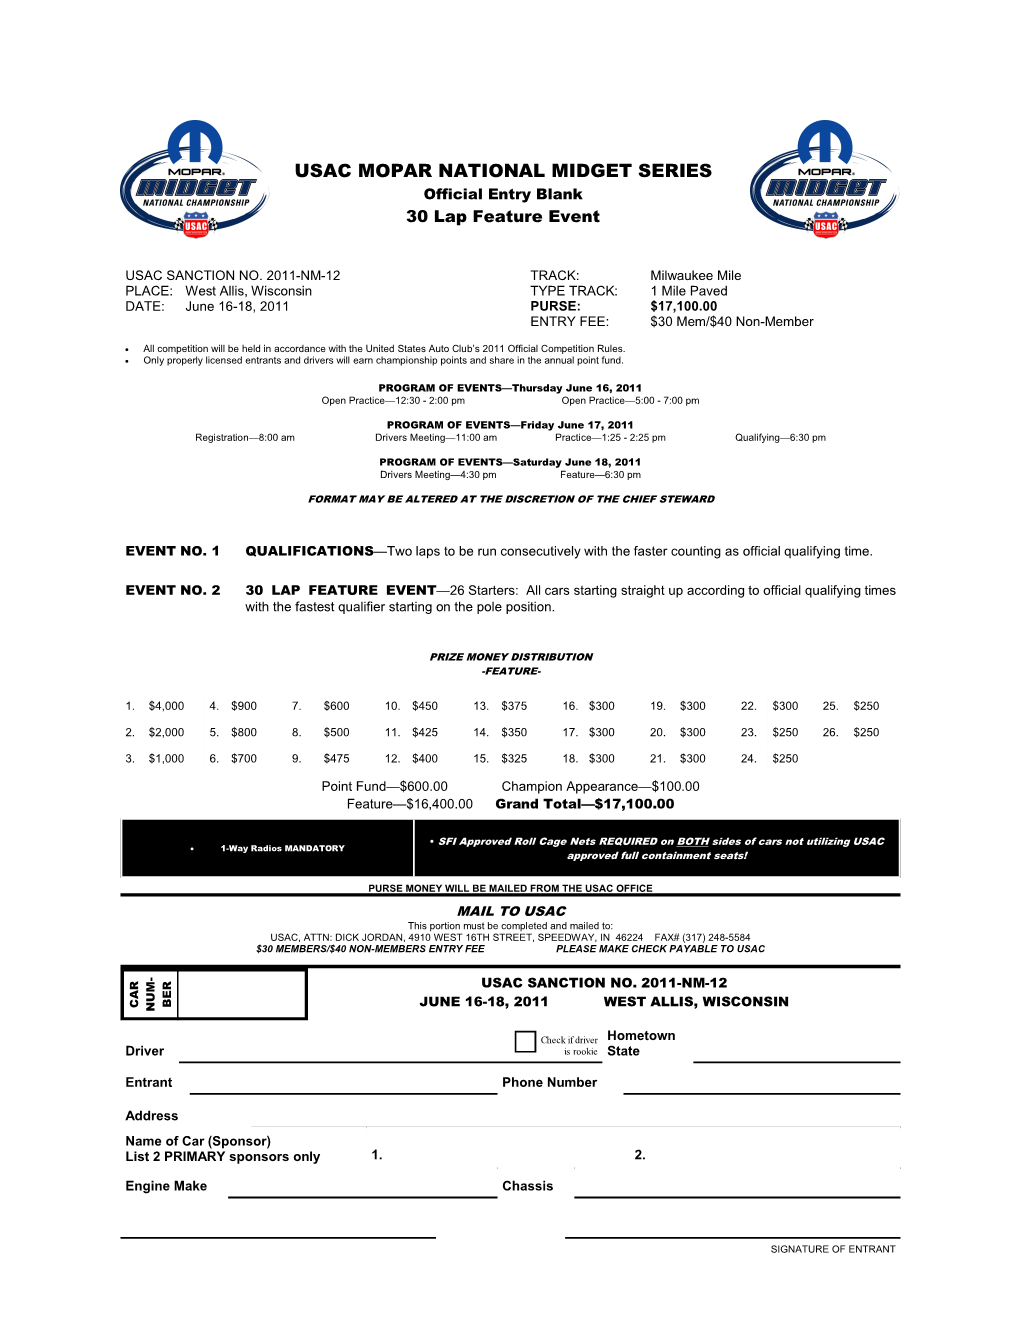 USAC MOPAR NATIONAL MIDGET SERIES Official Entry Blank 30 Lap Feature Event